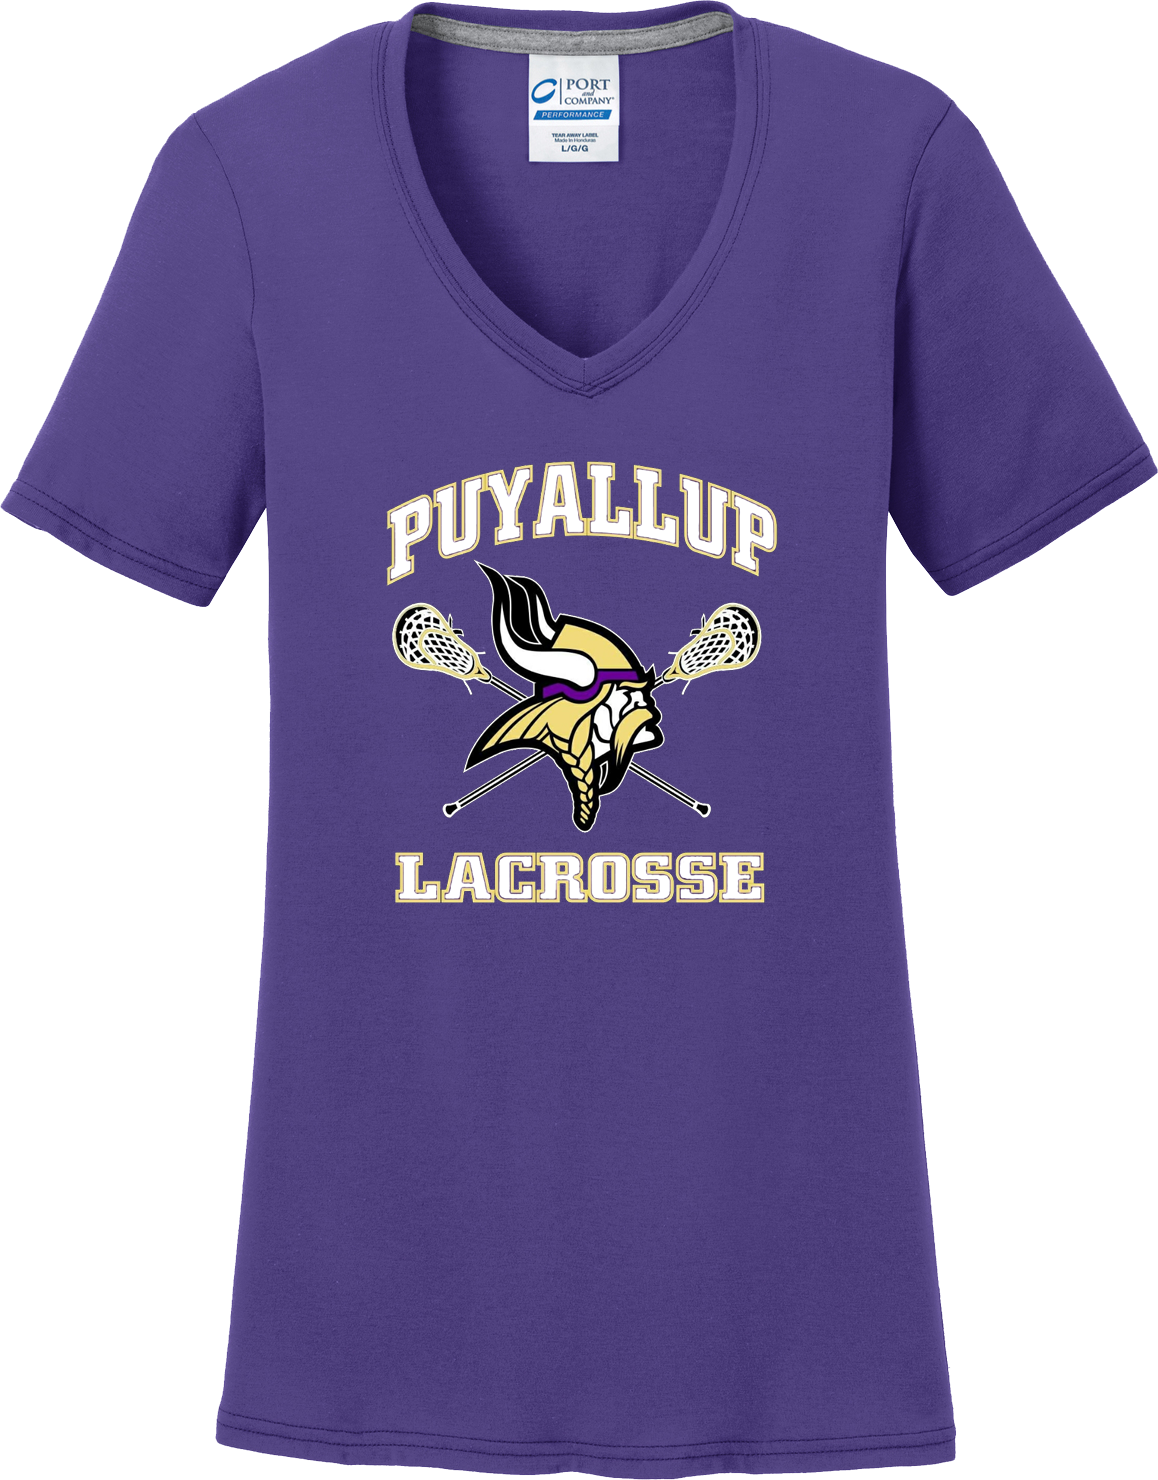 Puyallup Lacrosse Women's Purple T-Shirt